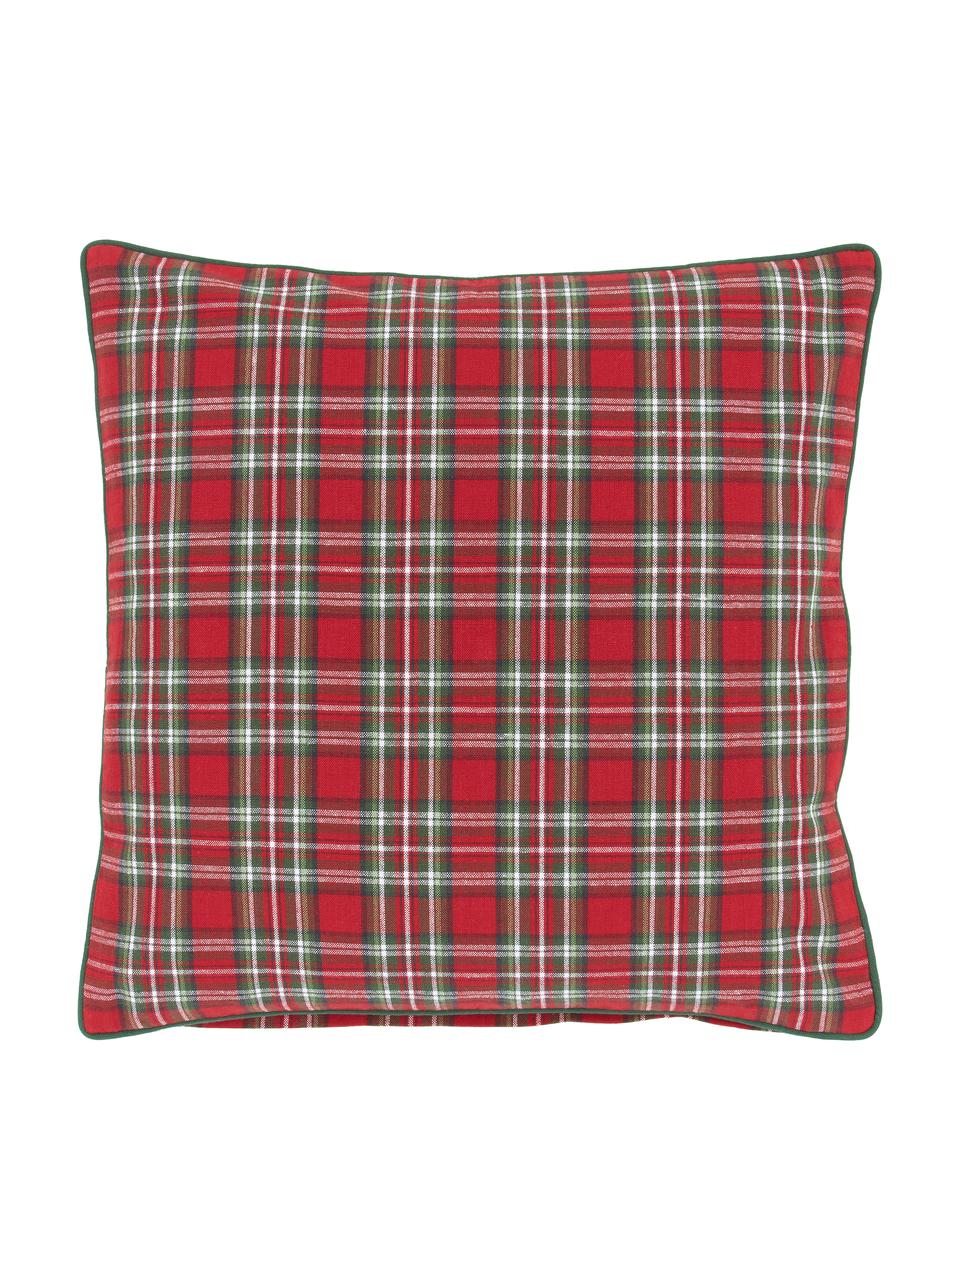 Károvaný povlak na polštář Tartan, 100% bavlna, Červená, tmavě zelená, Š 45 cm, D 45 cm